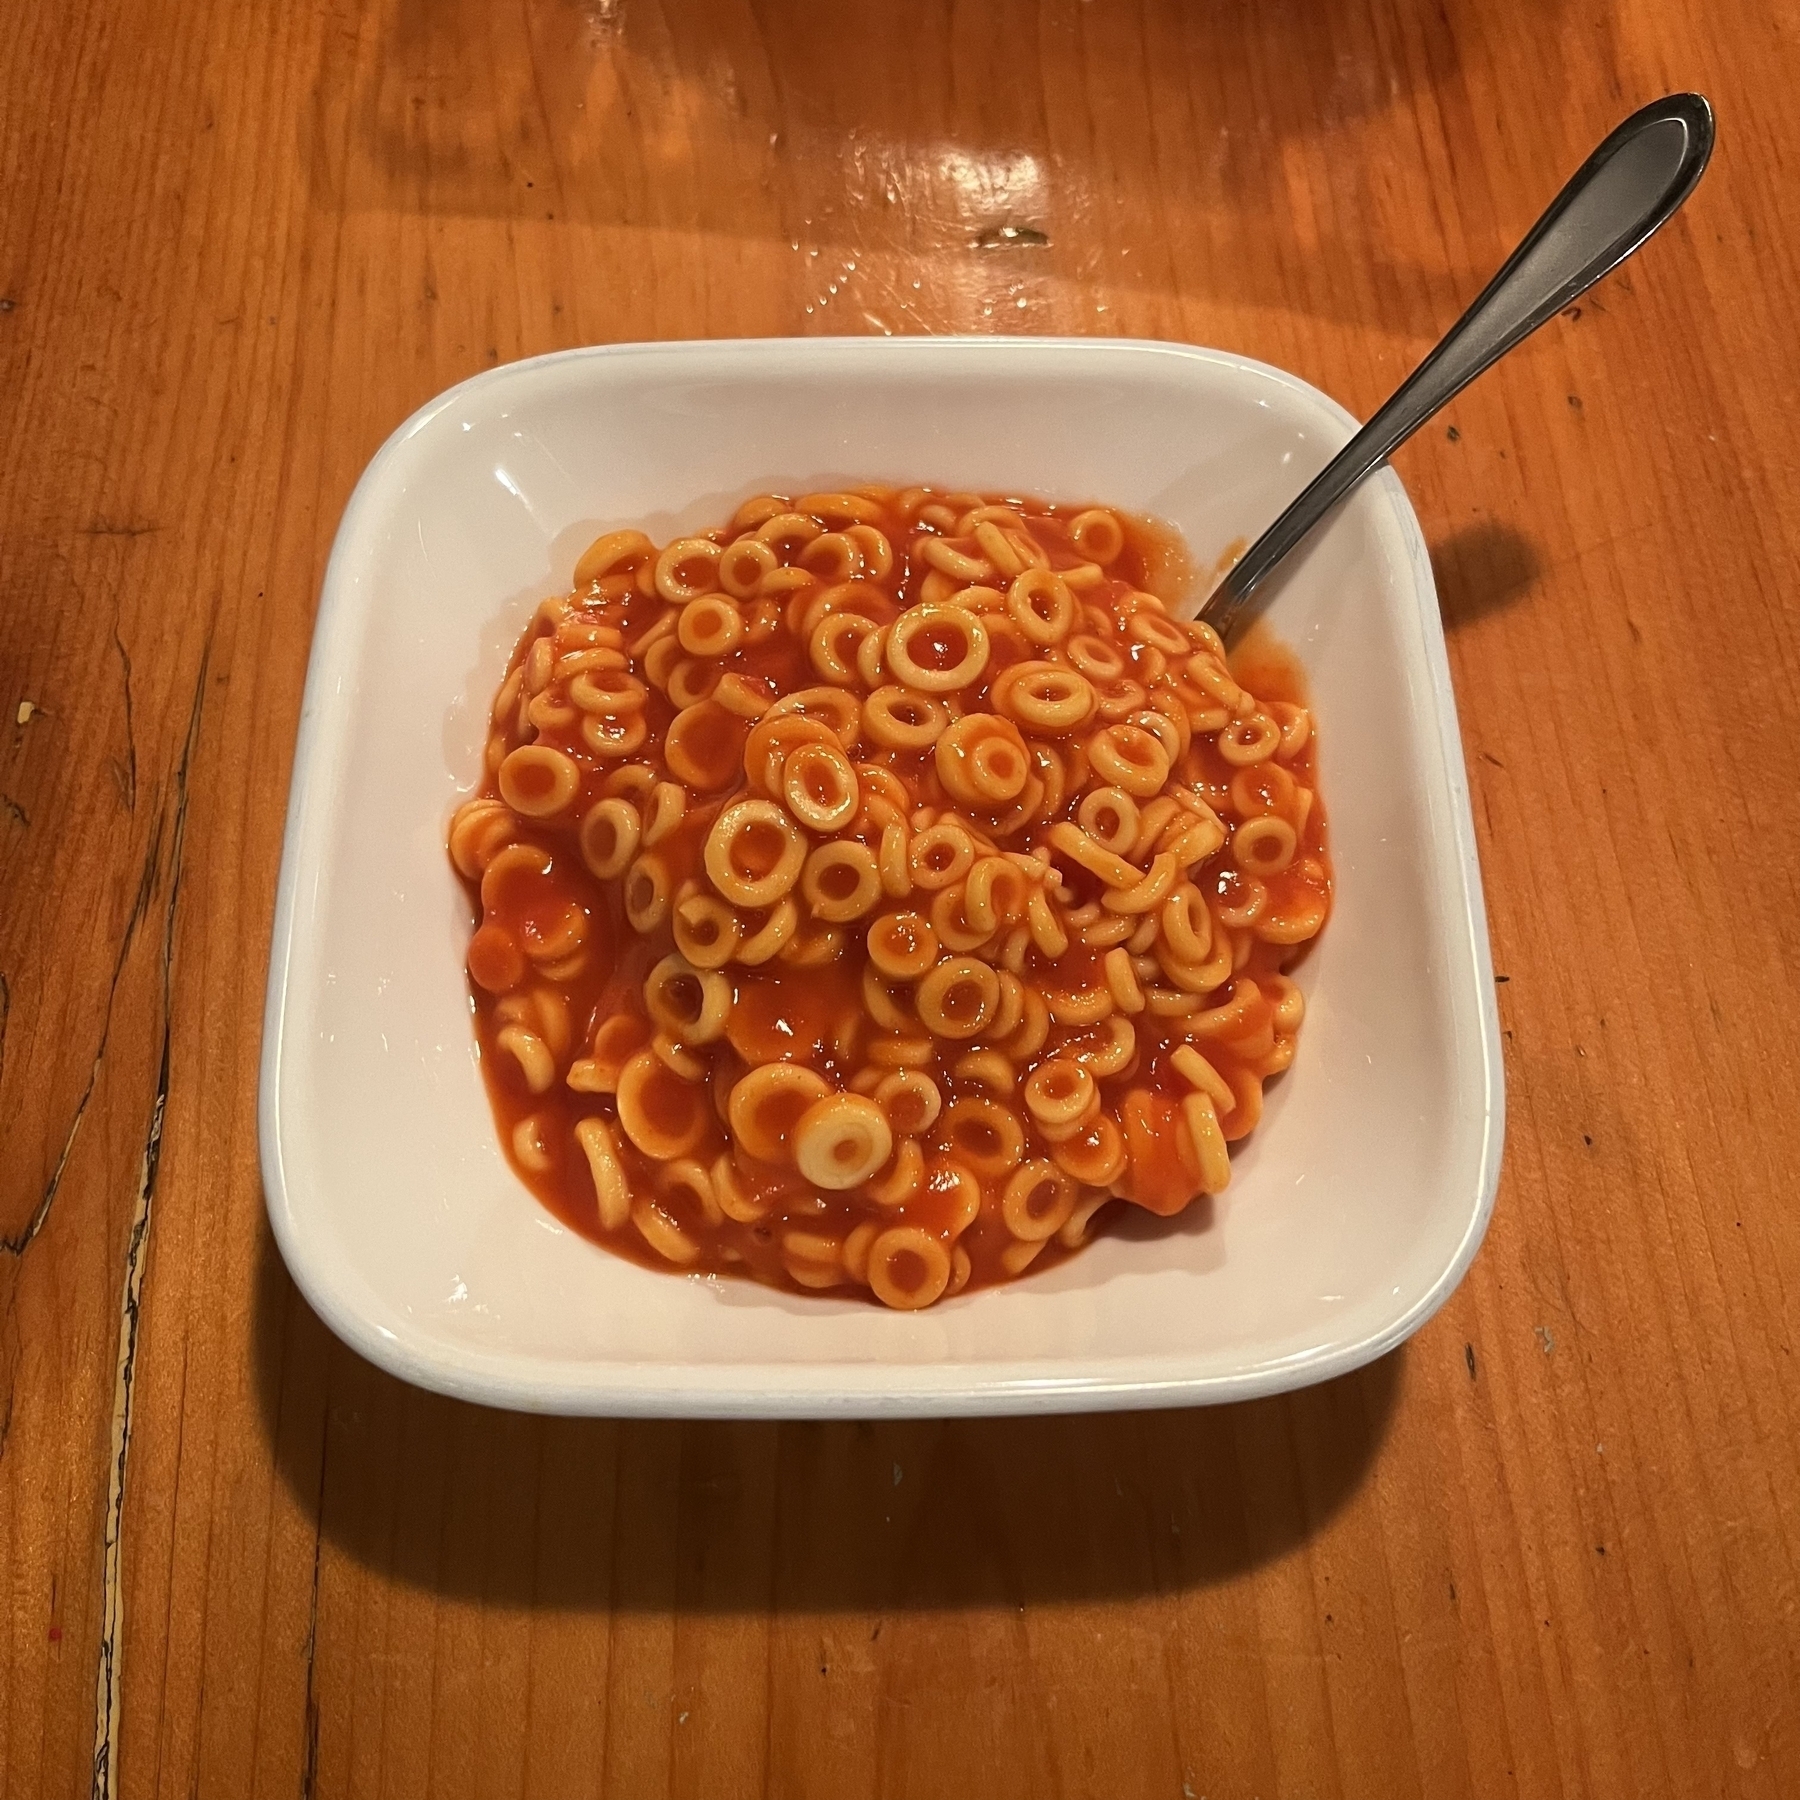 Bowl of spaghettios